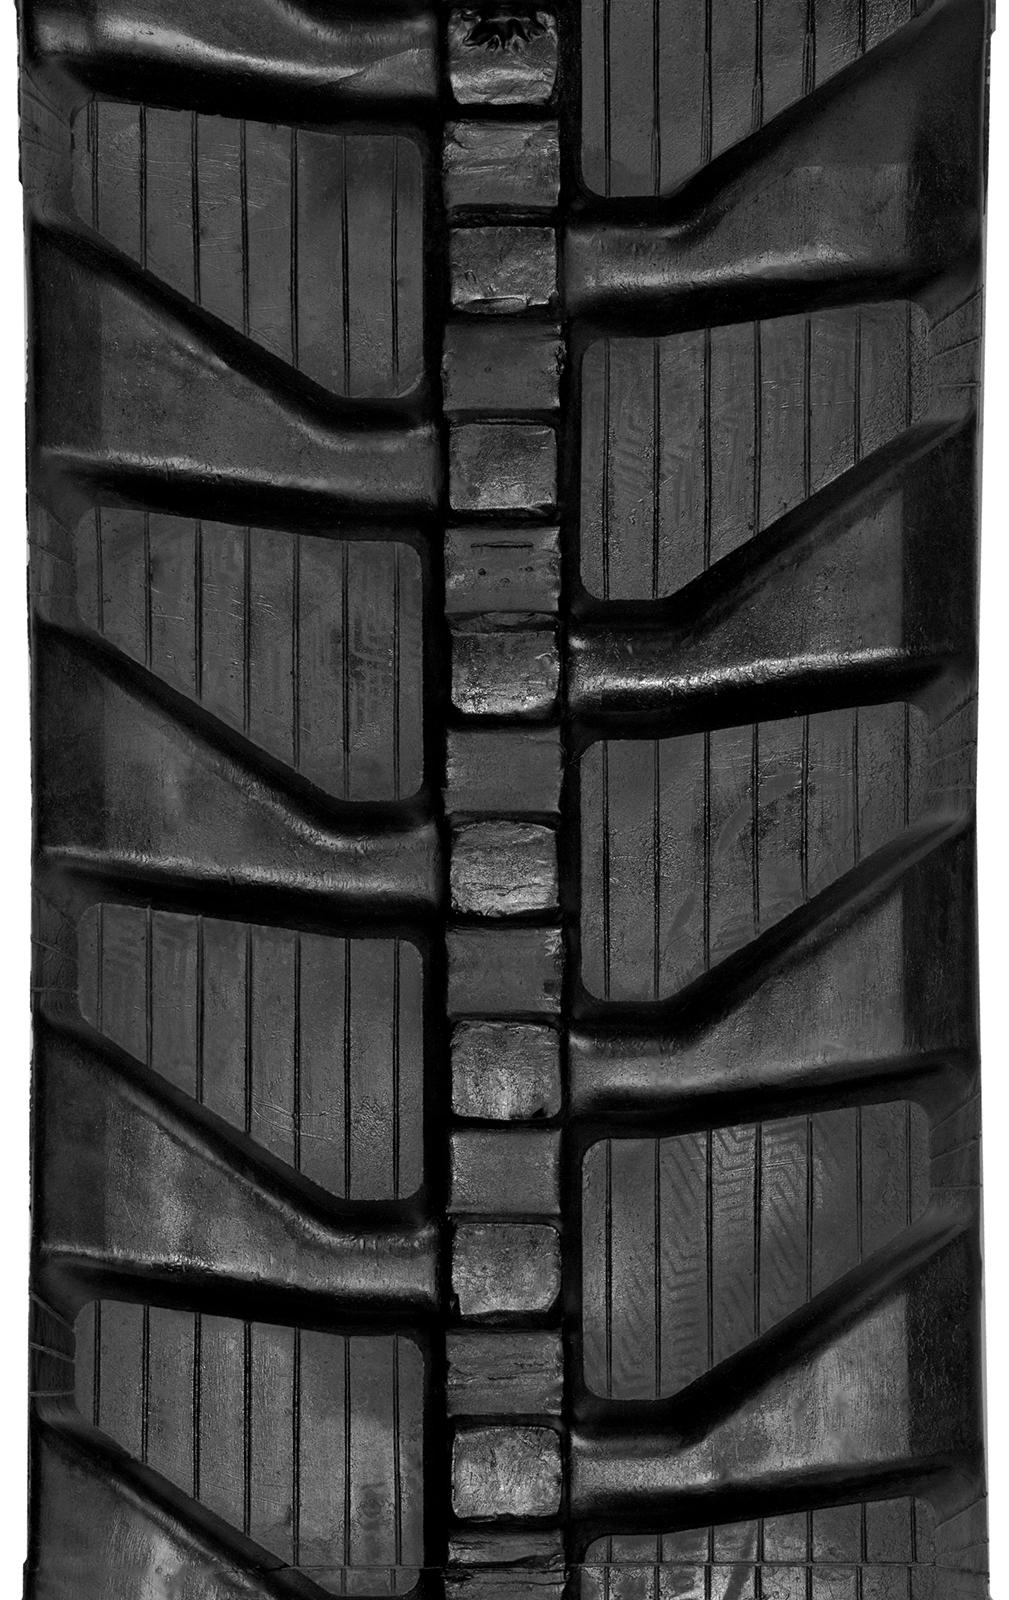 set of 2 9" heavy duty rubber track (230x48x60)